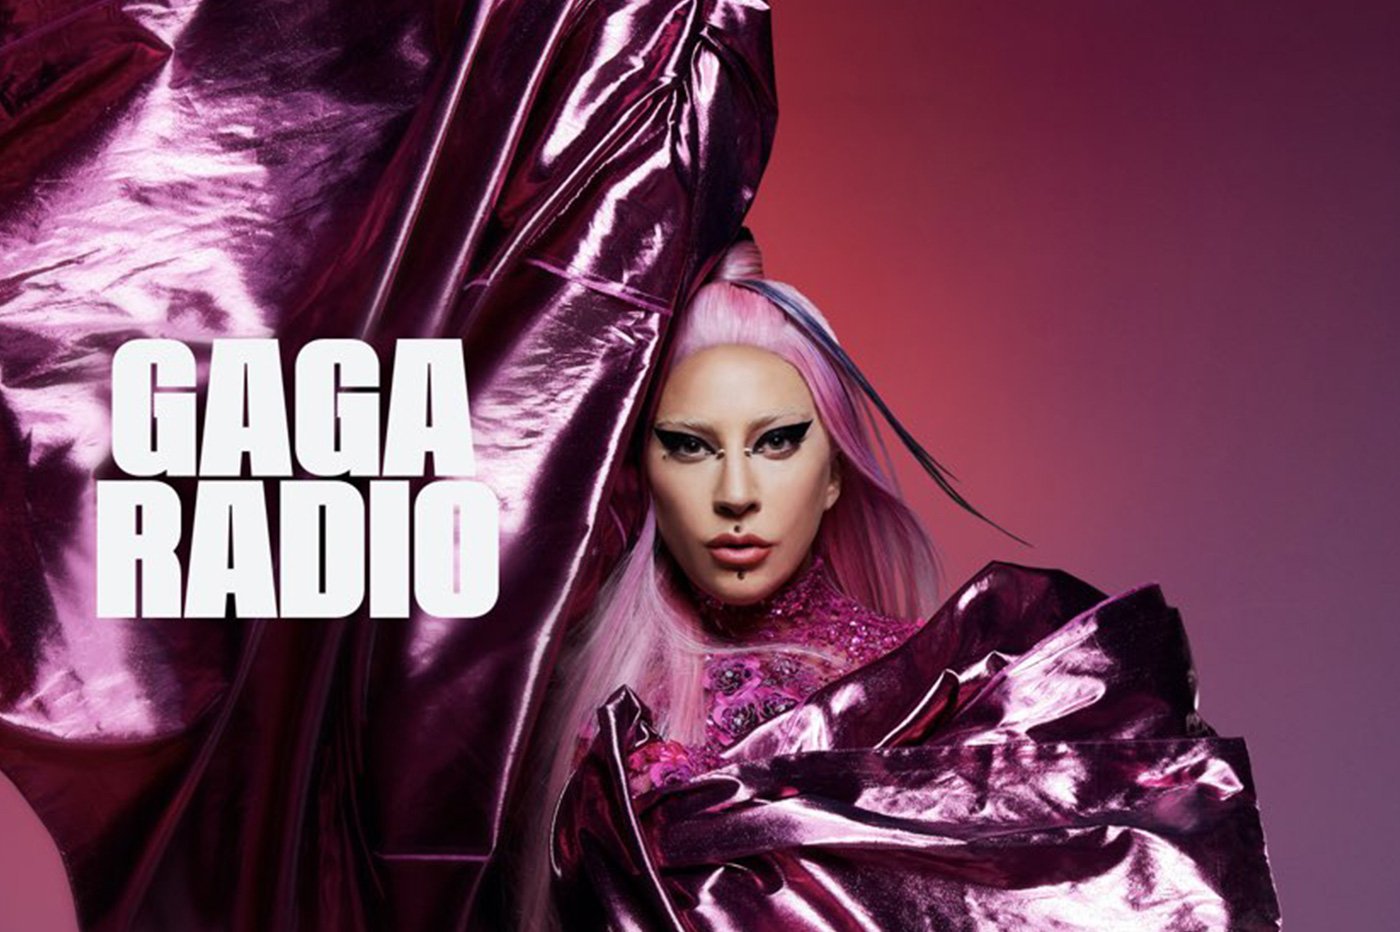 Lady Gaga Apple Music Gaga Radio